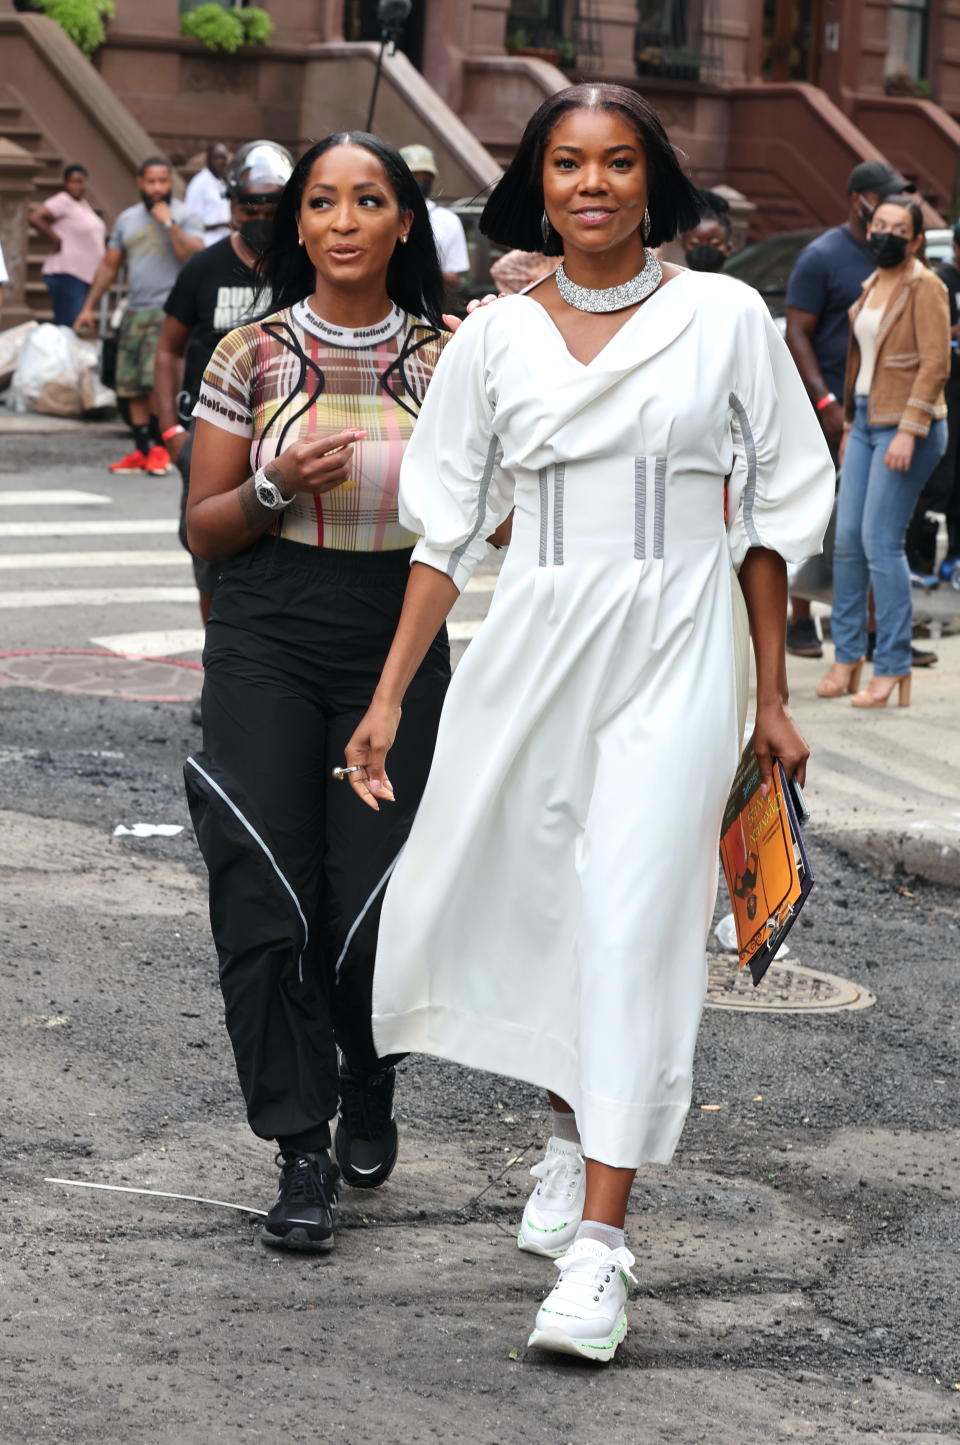 Gabrielle Union and Latoia Fitzgerald film “The Perfect Find” in downtown Manhattan. - Credit: Jose Perez / SplashNews.com